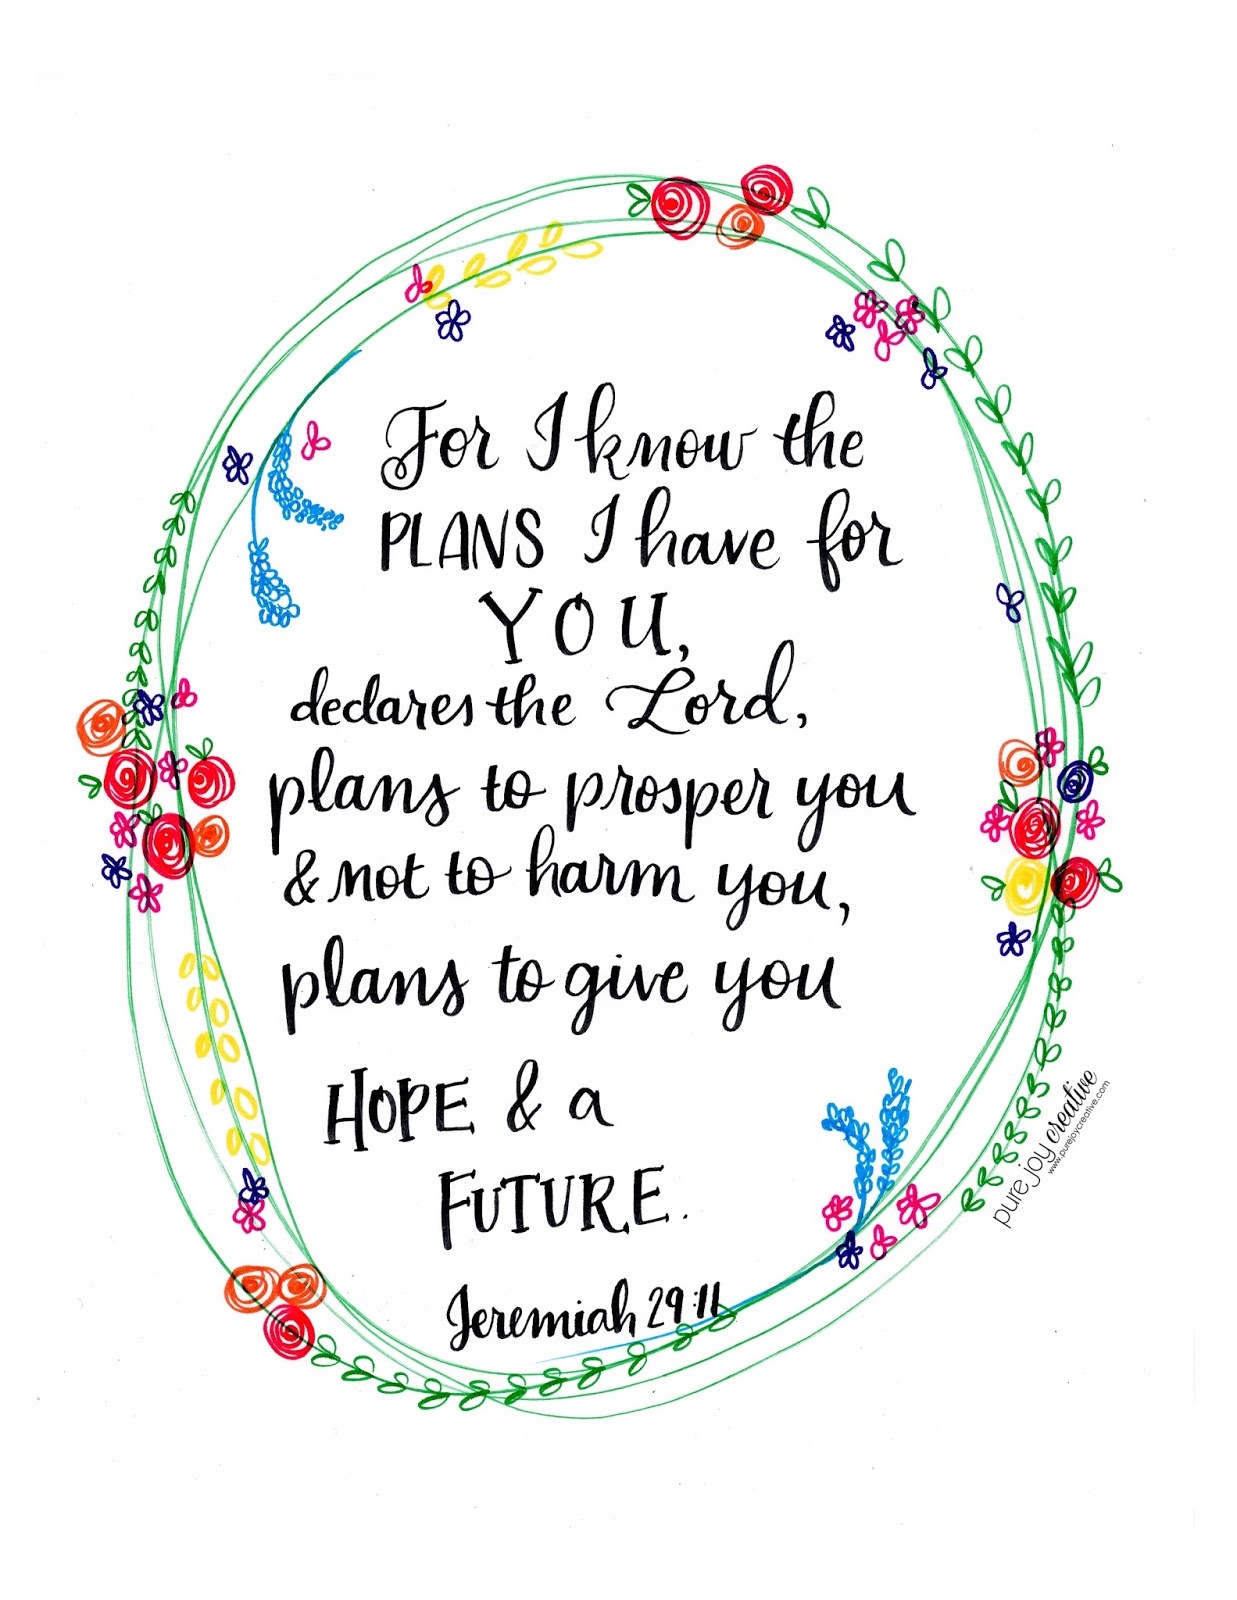 scripture jeremiah 29 11